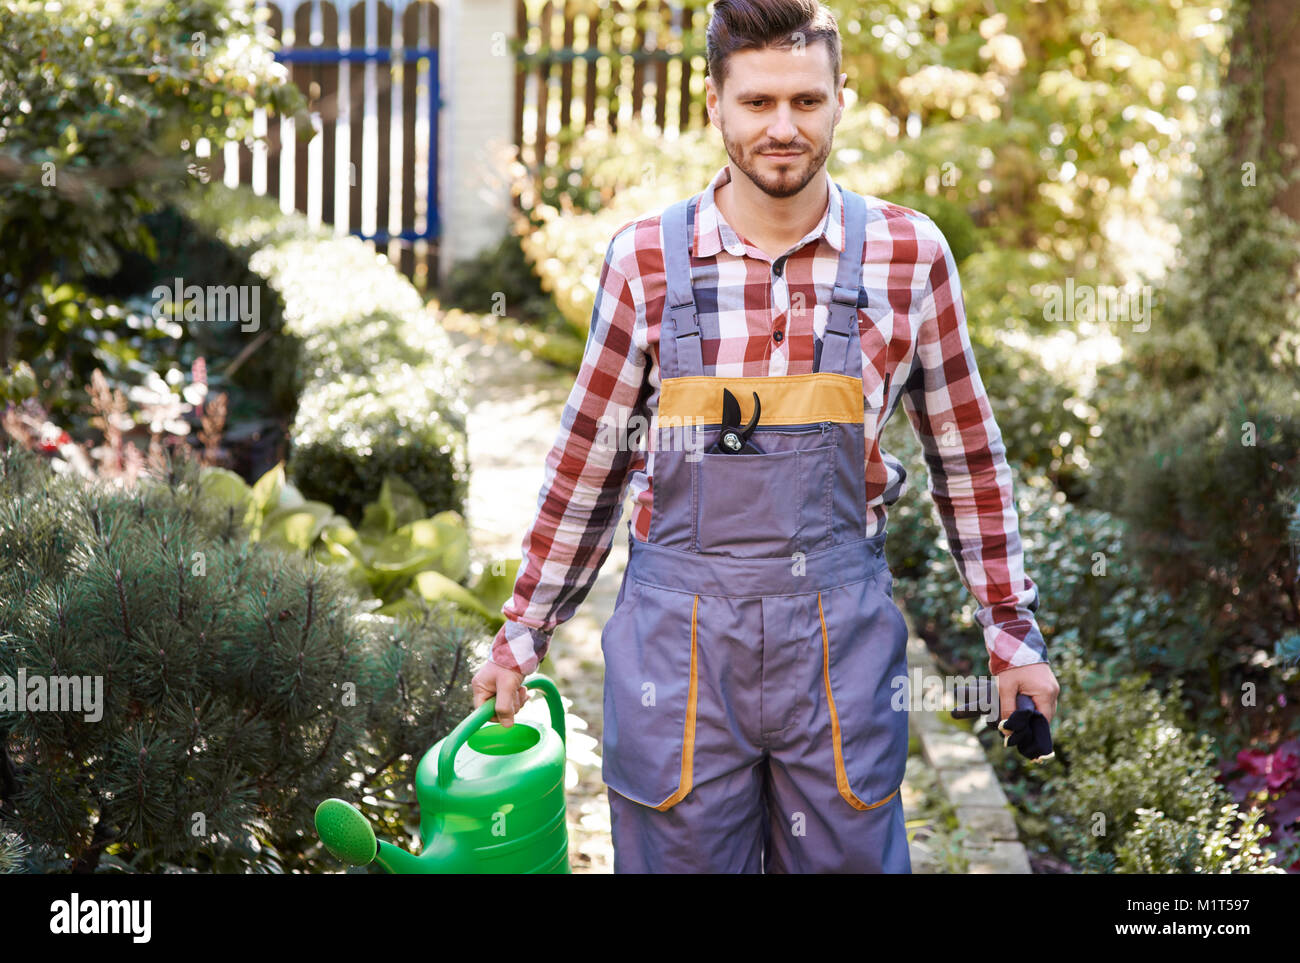 Gardener in uniform holding watering can Stock Photo